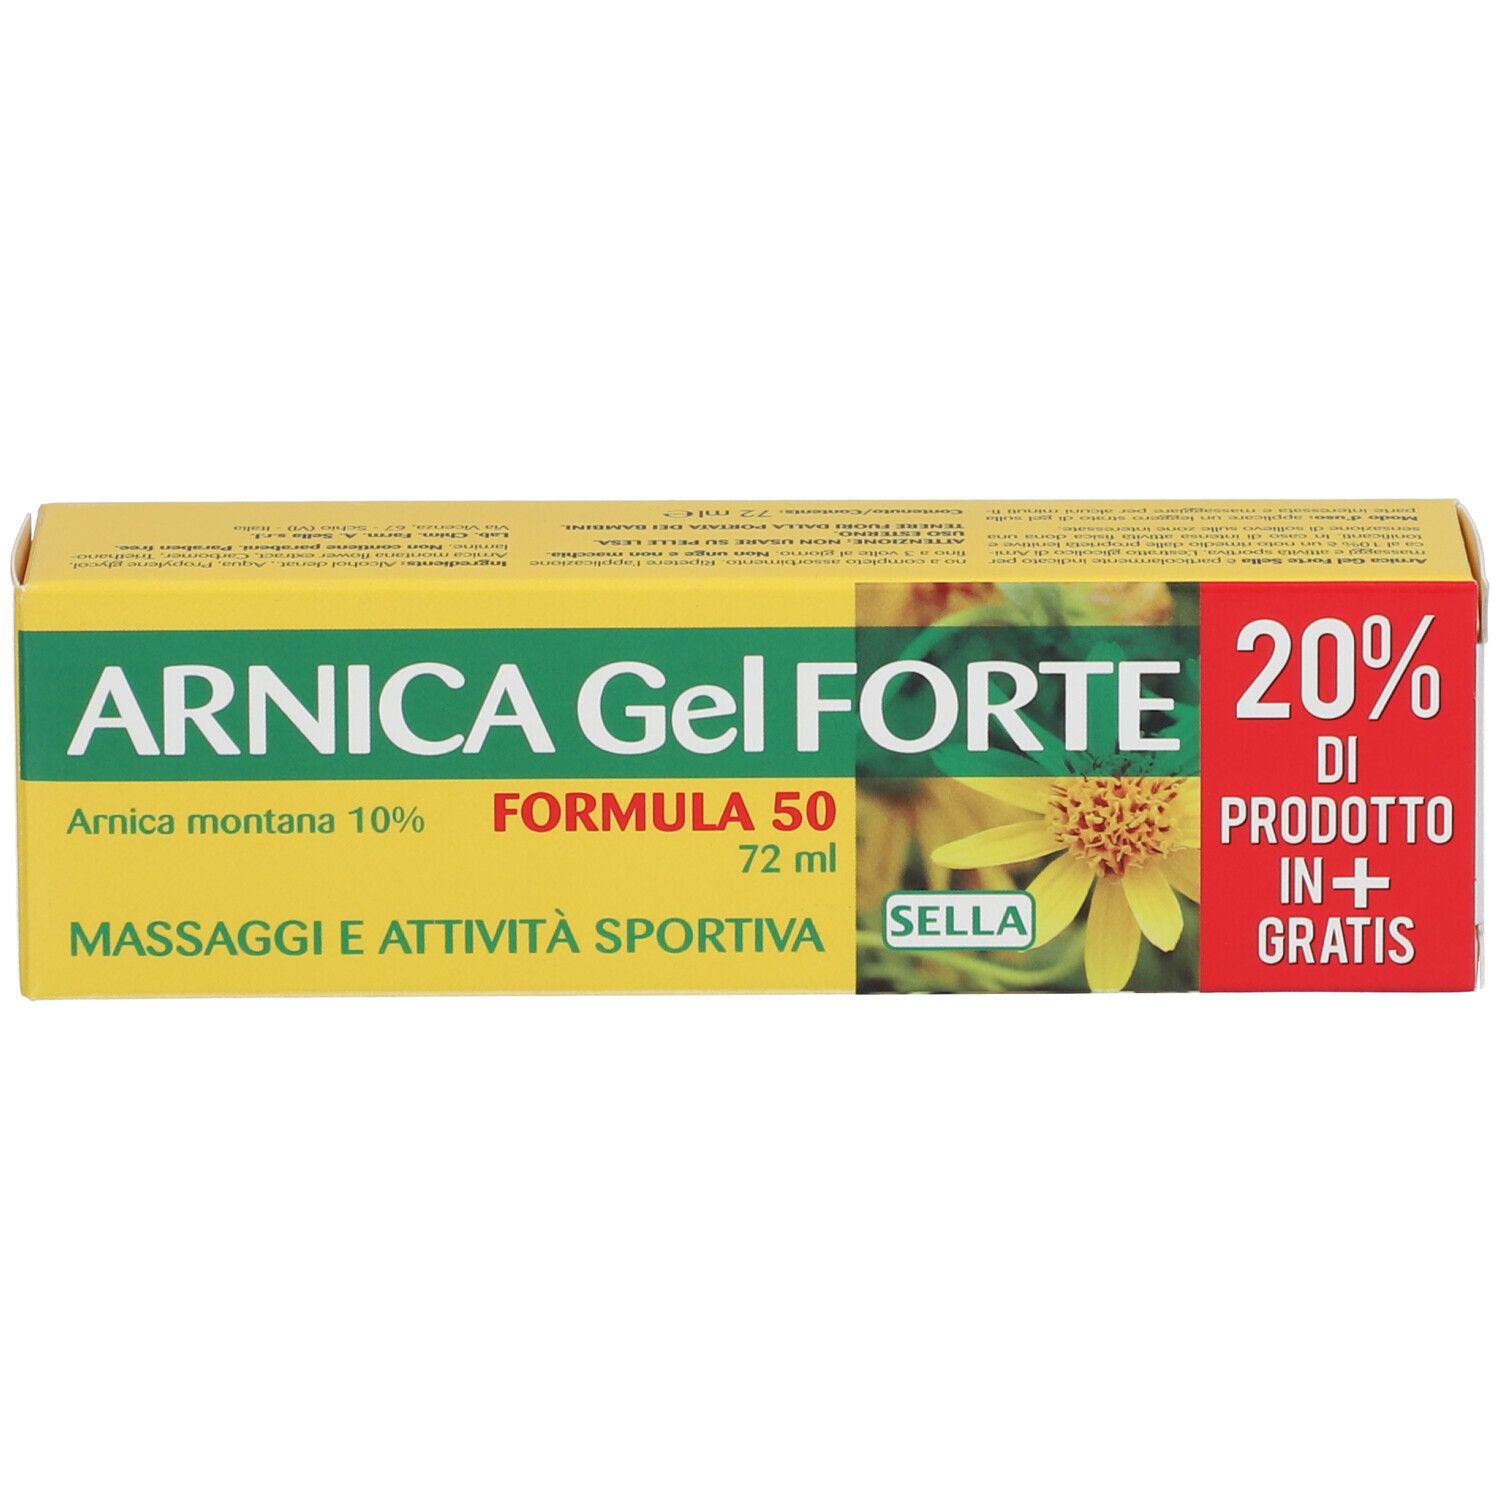 Sella Arnica 10 % Gel Forte Formula 50